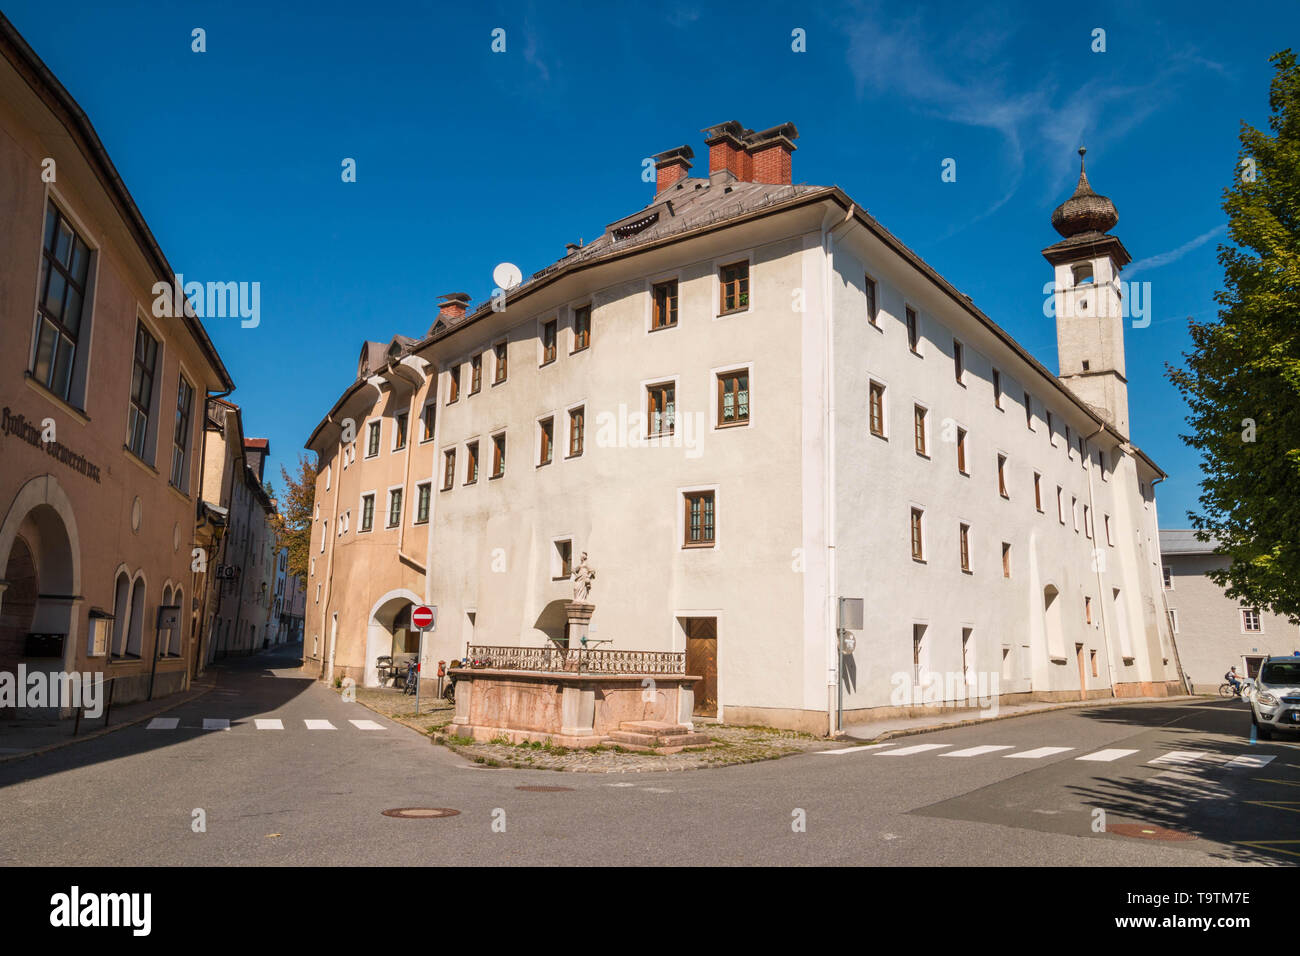 Hallein, Austria - September 12, 2018: Narrow streets of Hallein old town and hospital church Bürgerspitalkirche with onion dome. Stock Photo